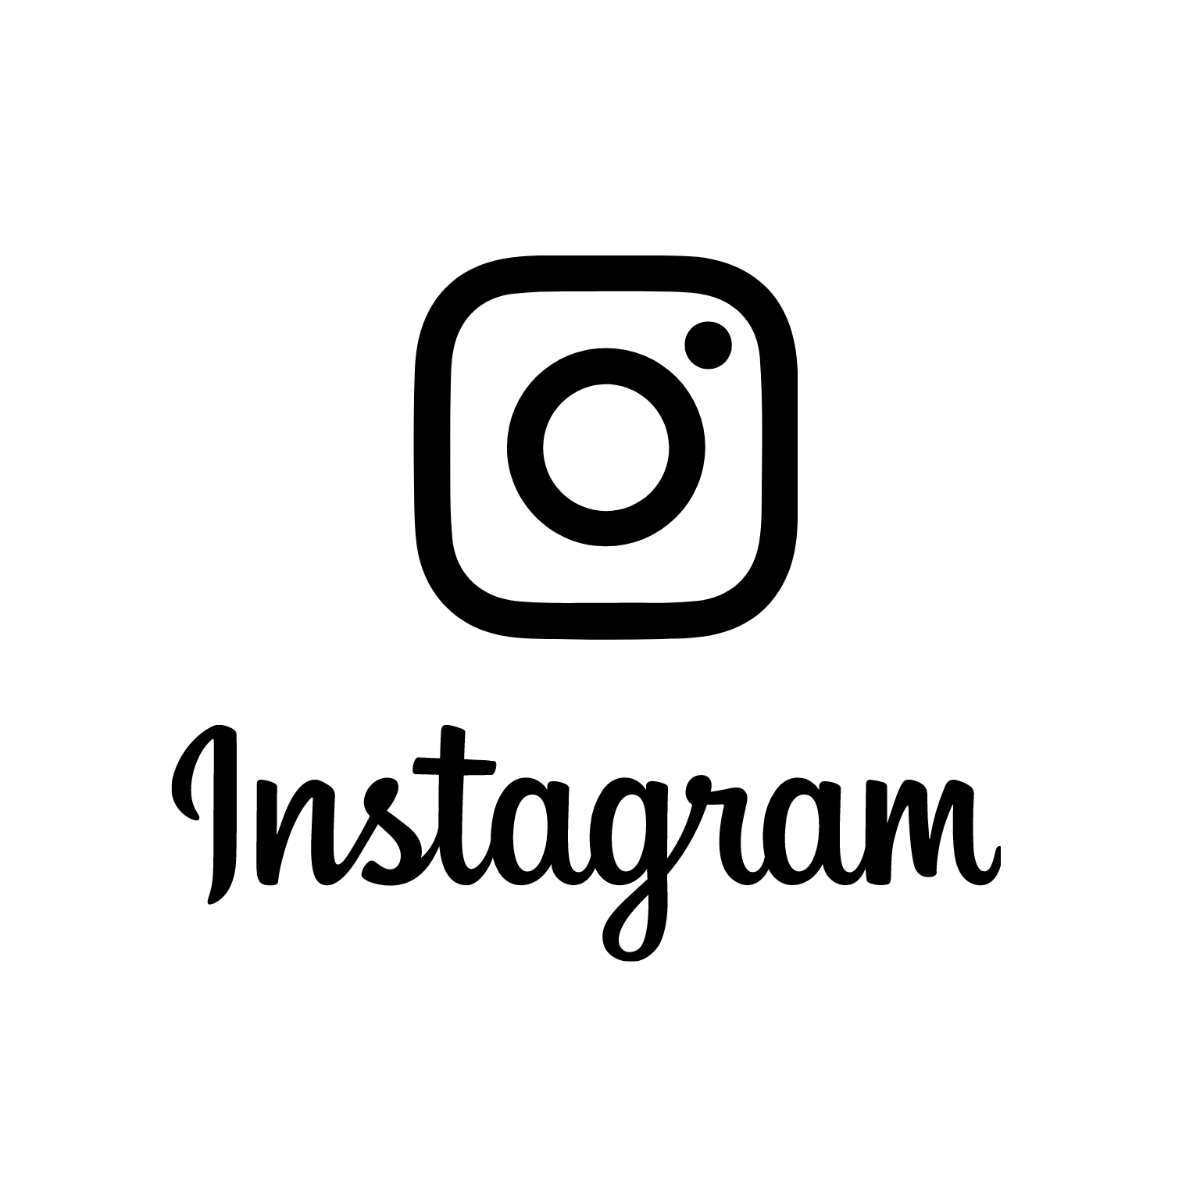 Instagram Logo Black And White Vector Template